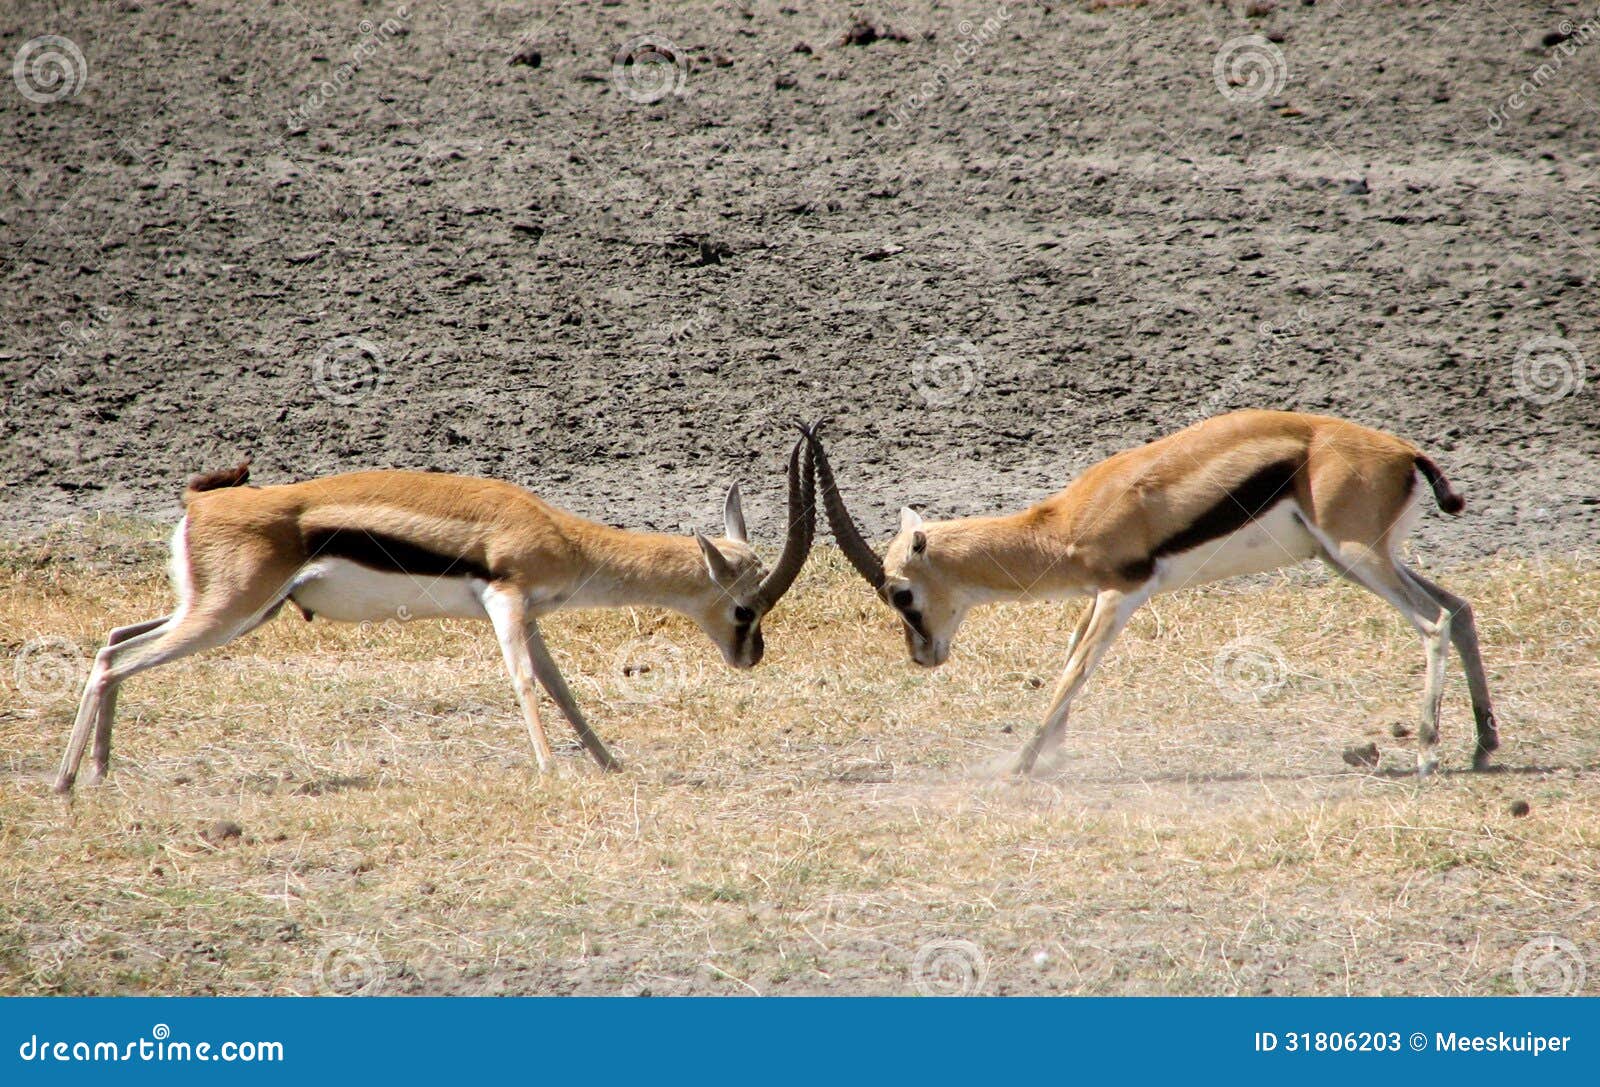 thomson gazelle fight